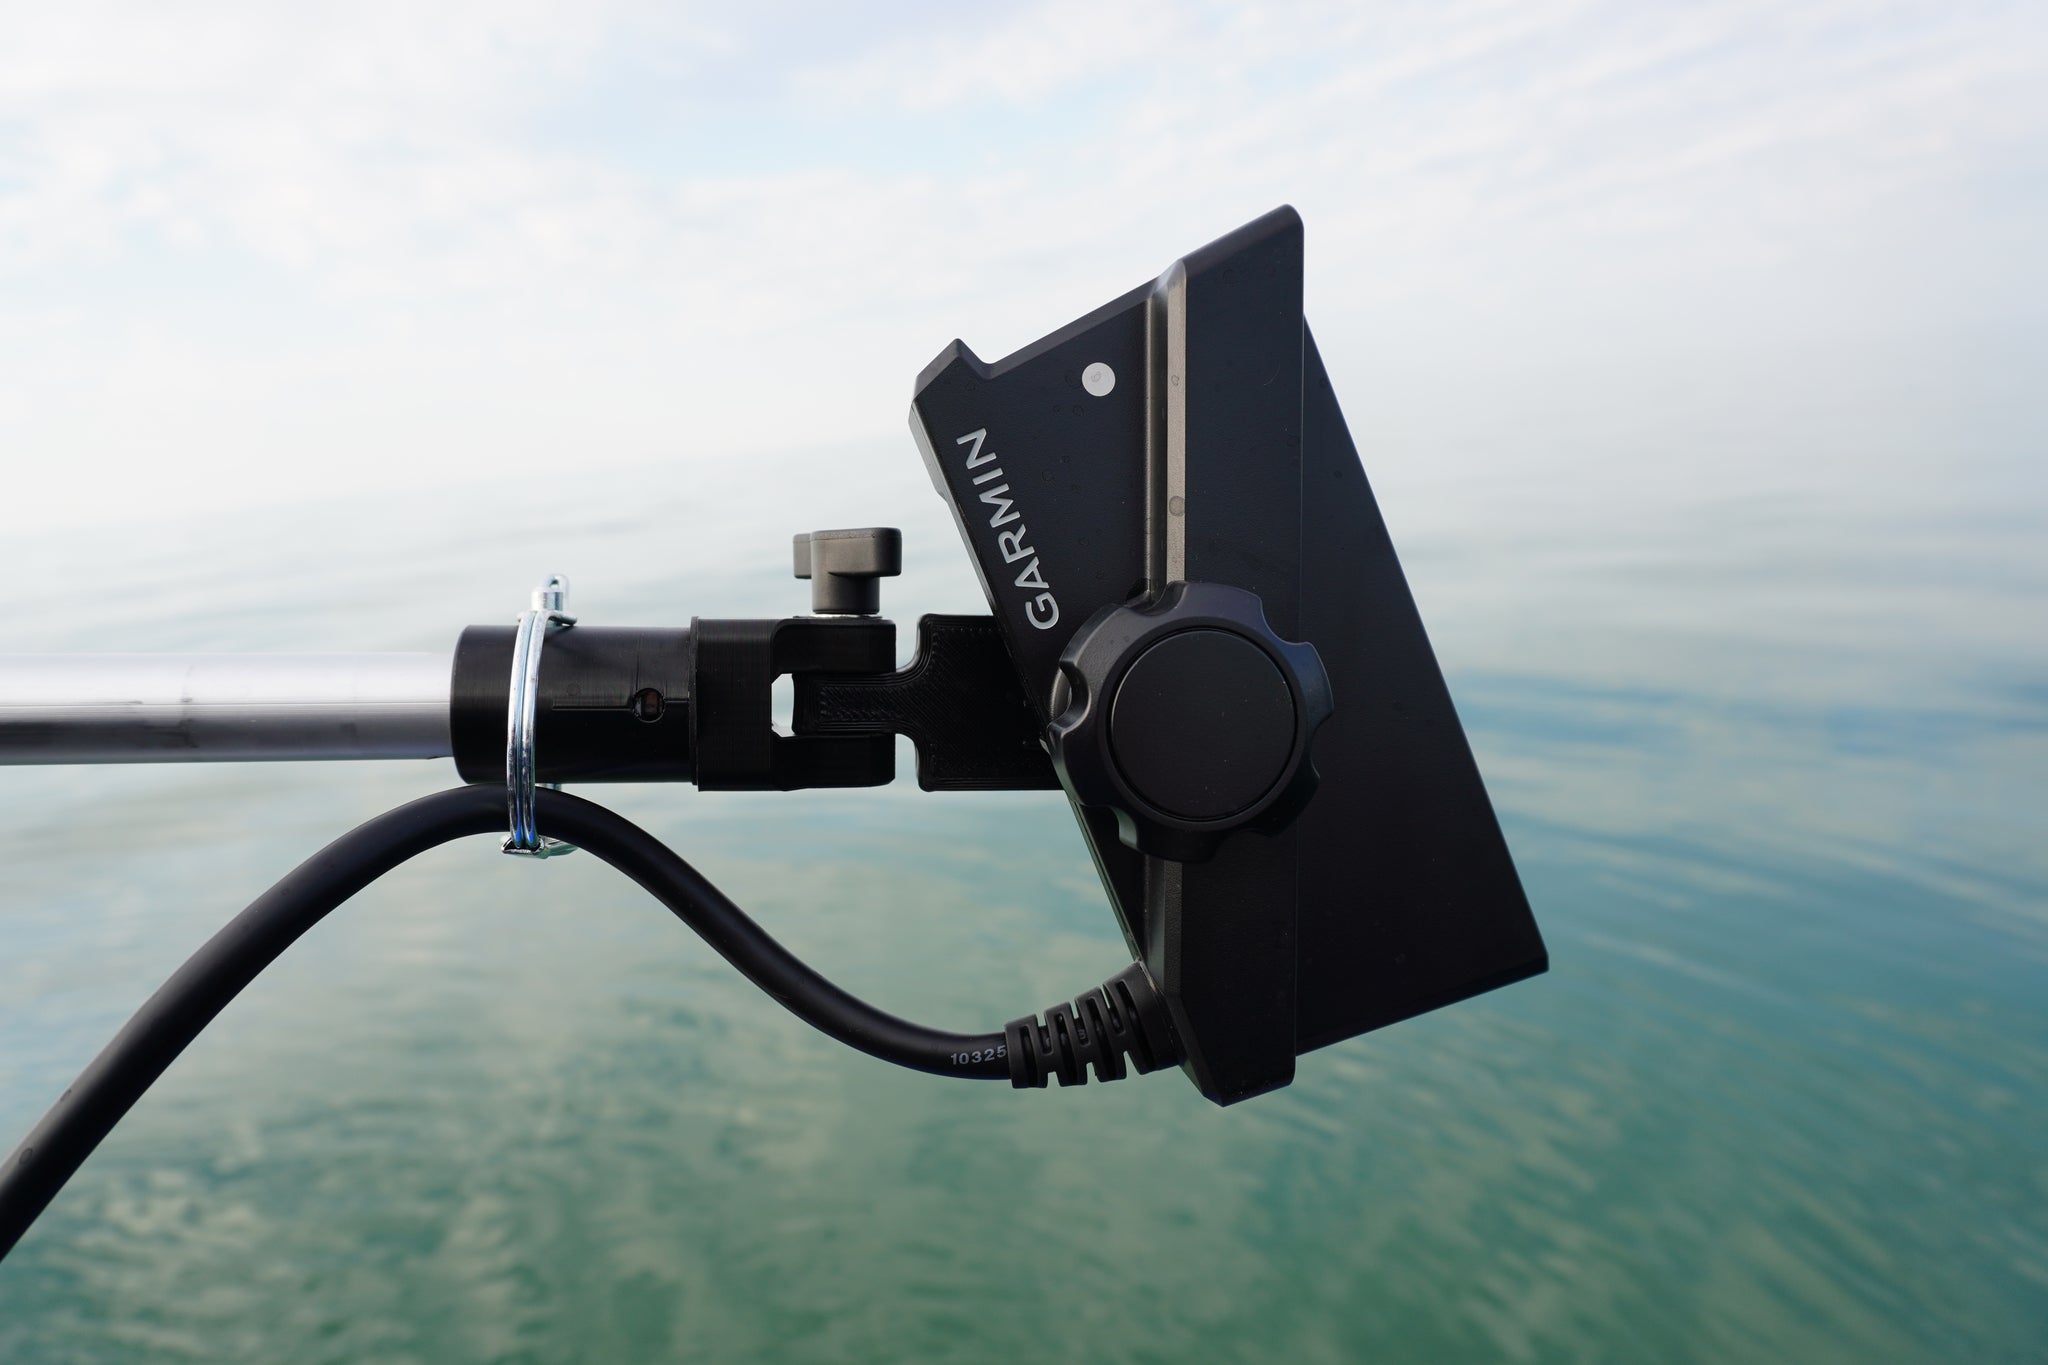 Summit Fishing Garmin Livescope Transducer Pole With Quick Disconnect Transducer  Mount - 18-36 - LiveScope LVS62